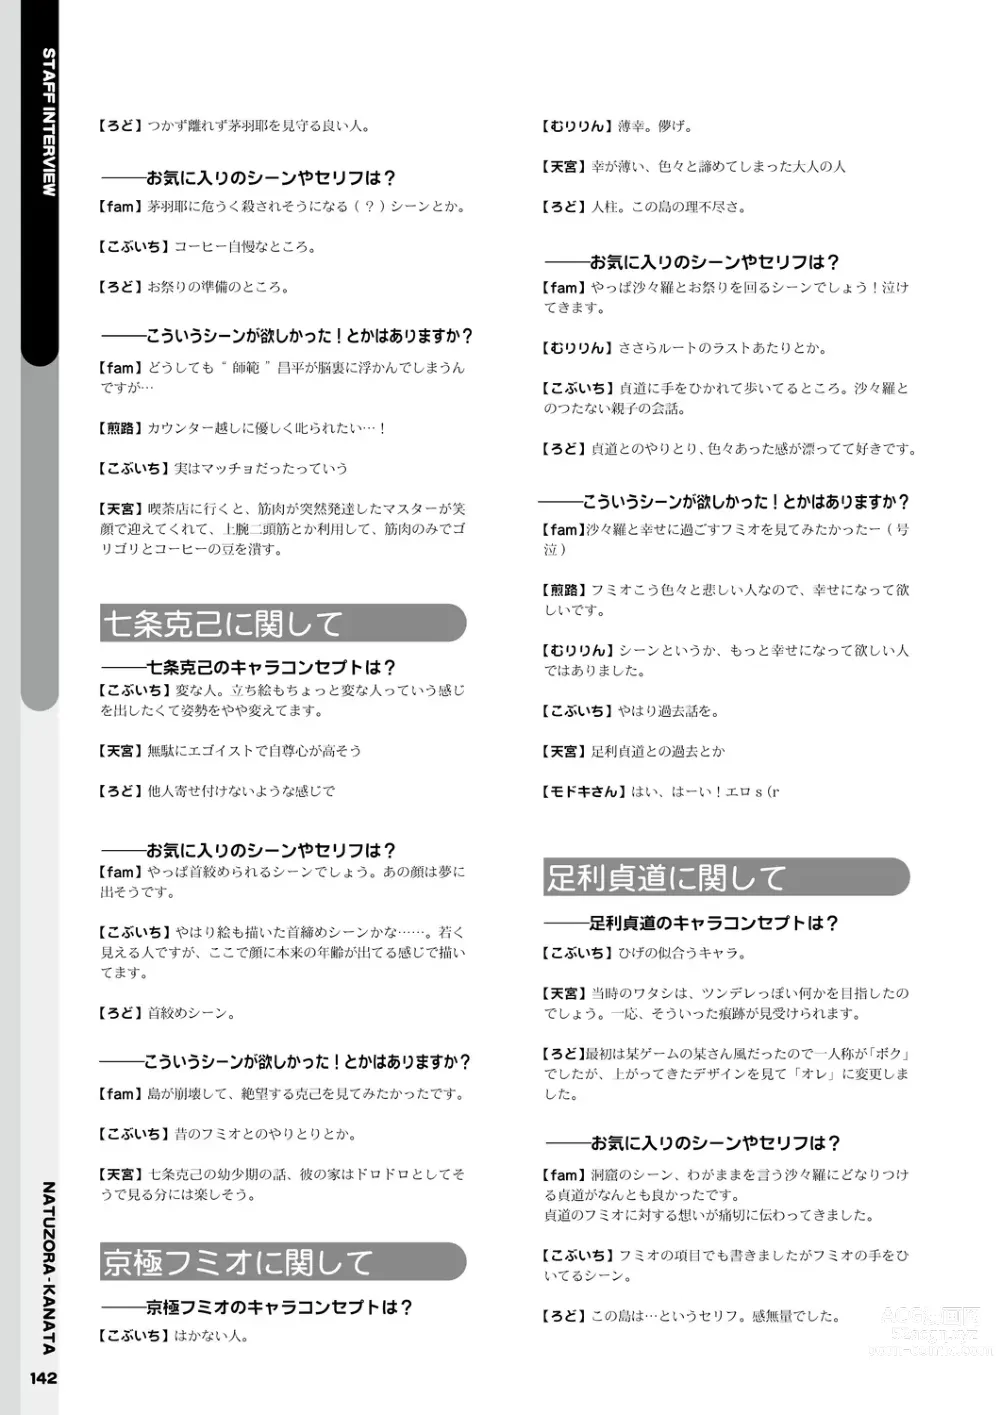 Page 144 of manga Natsuzora Kanata Official Visual Fan Book